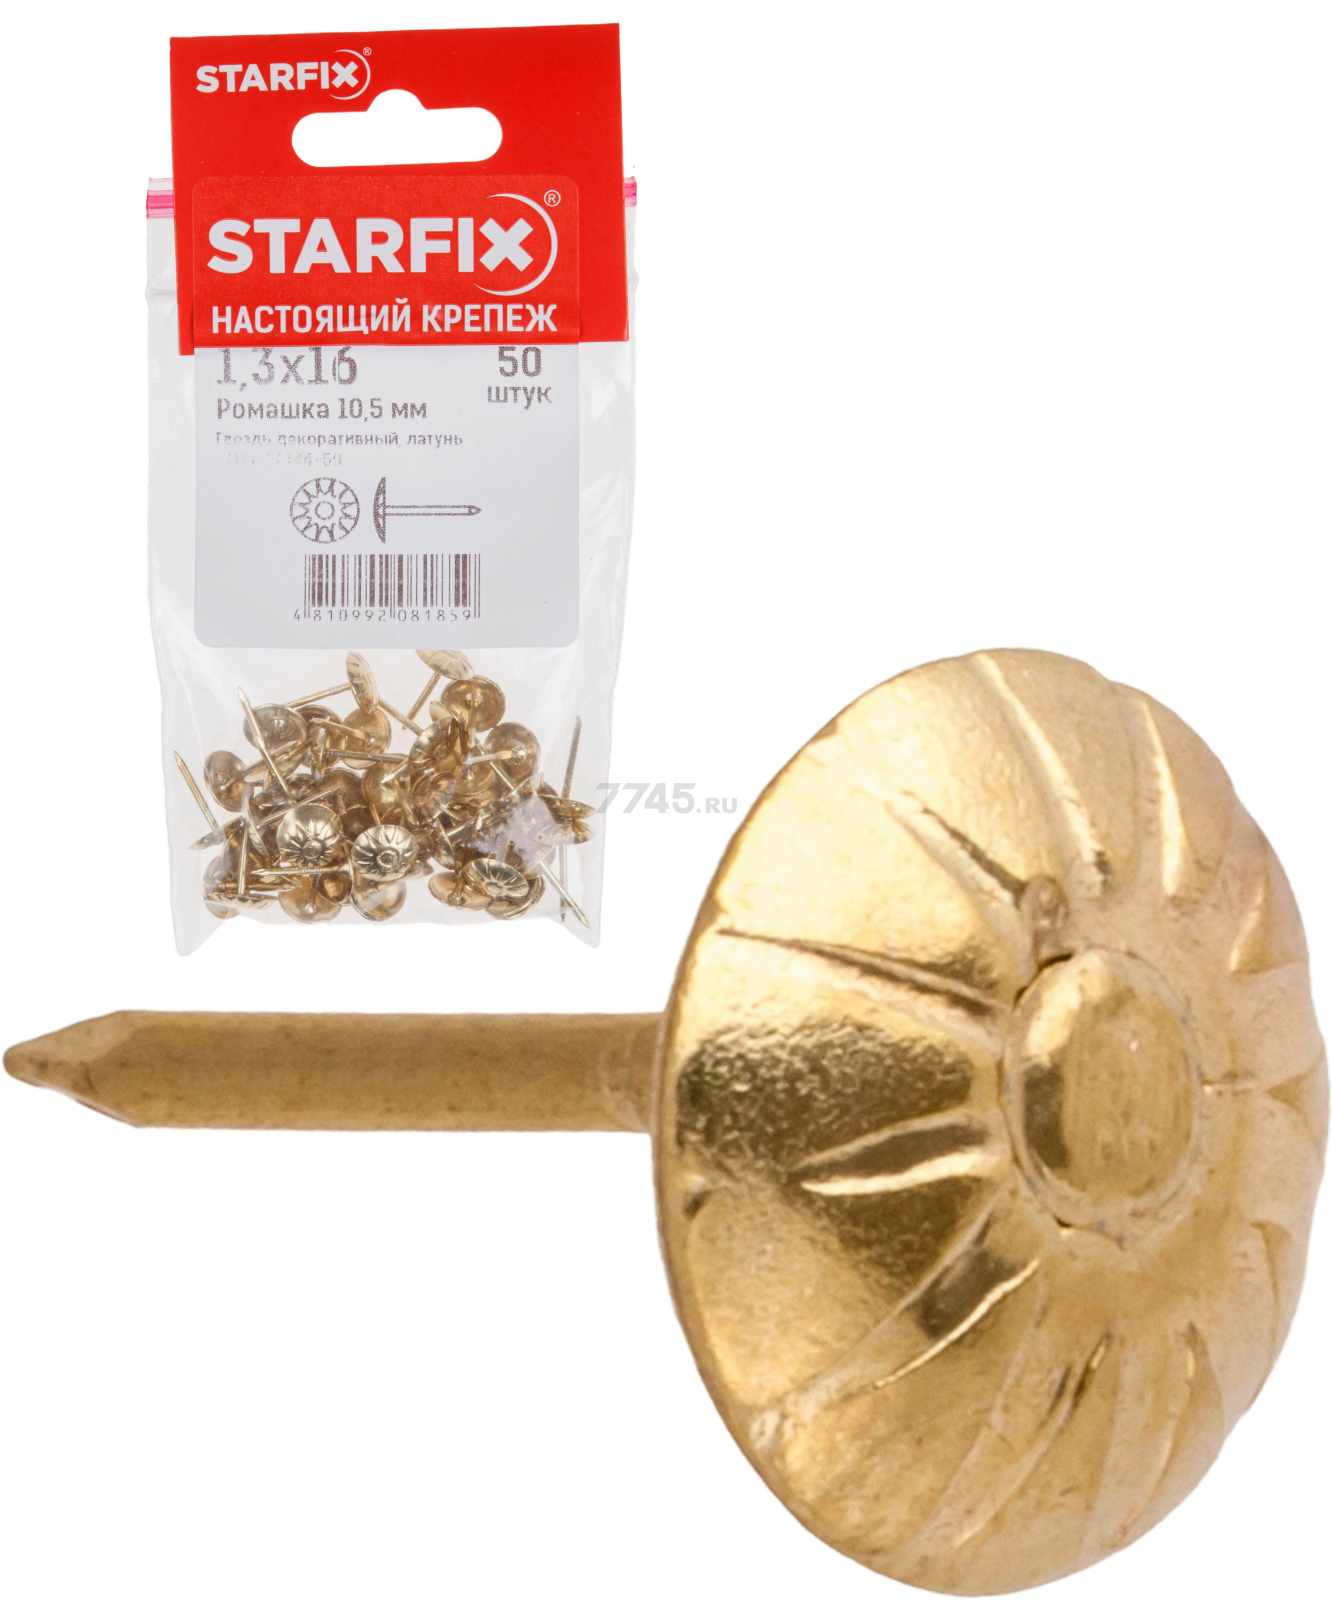 Гвозди декоративные 1,3х16 мм STARFIX Ромашка 10,5 мм латунь 50 штук (SMZ1-56144-50)